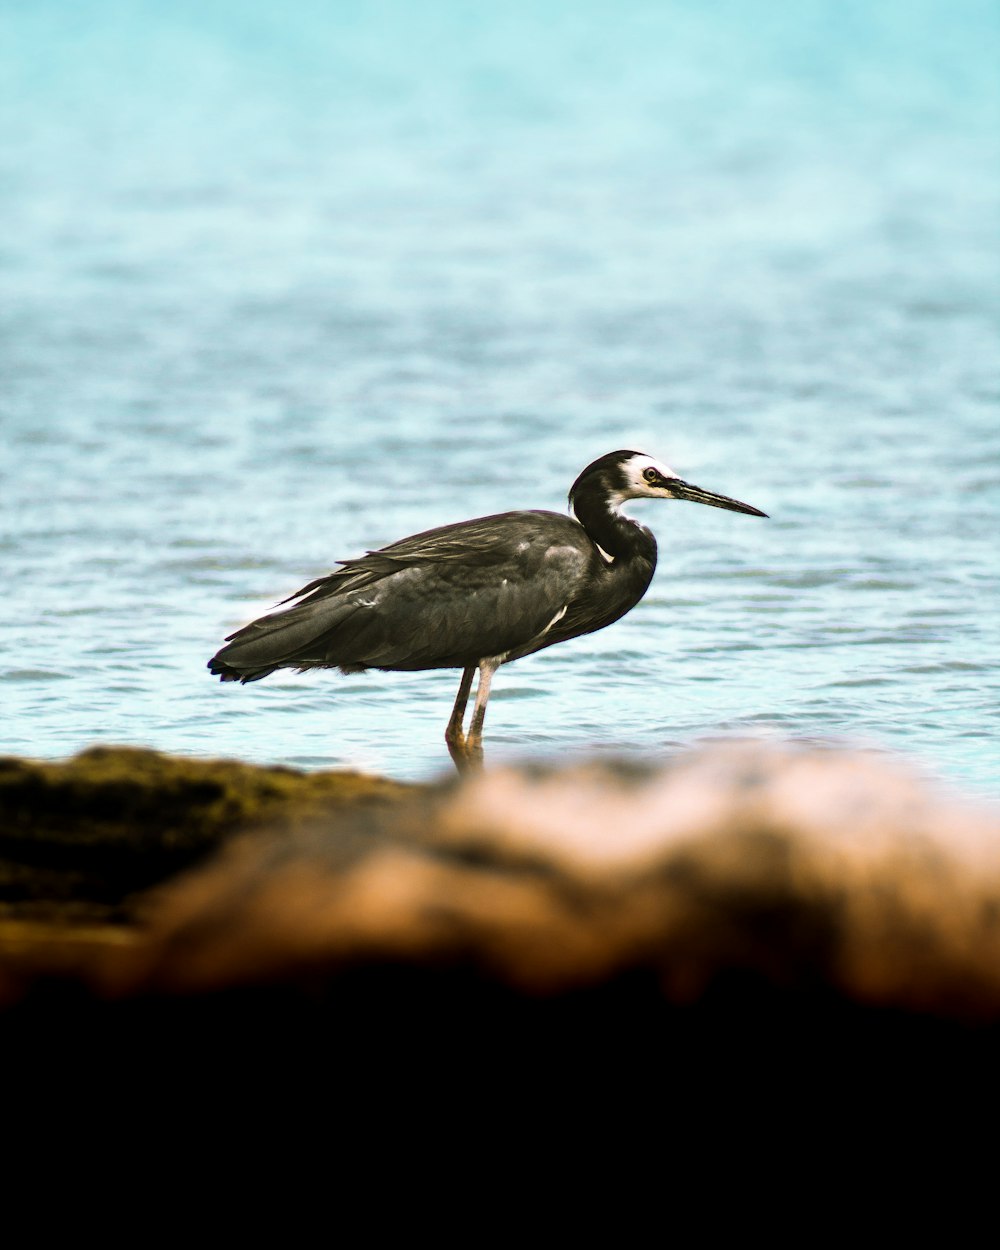 grey heron on brown rock near body of water during daytime